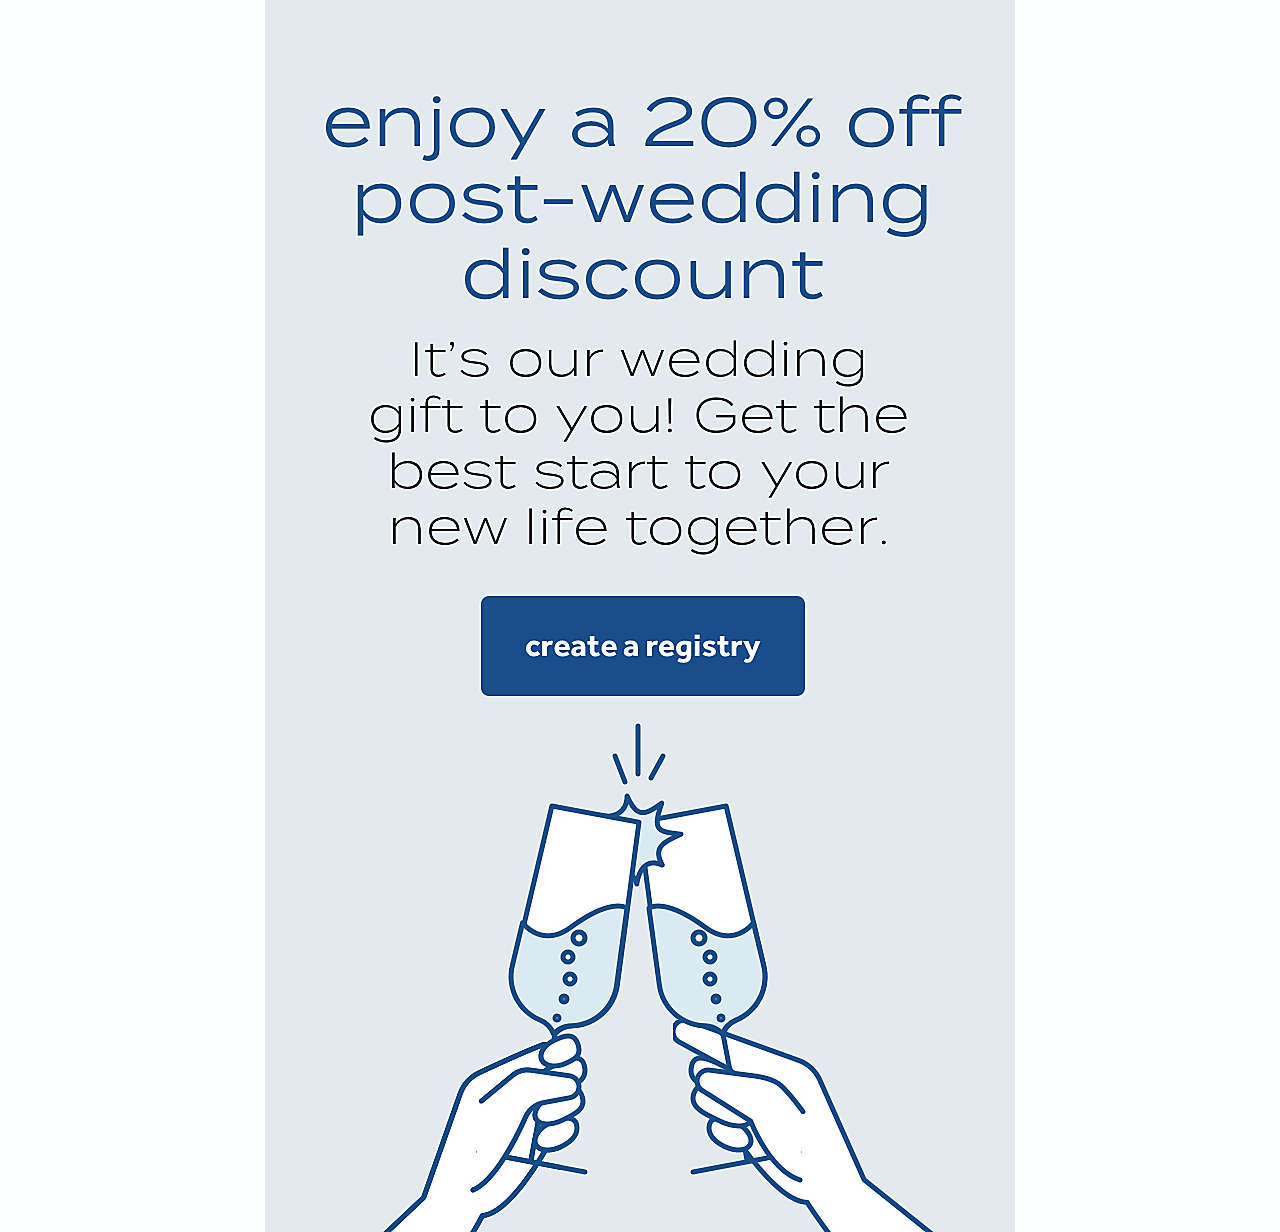 enjoy a 20% off post-wedding discount